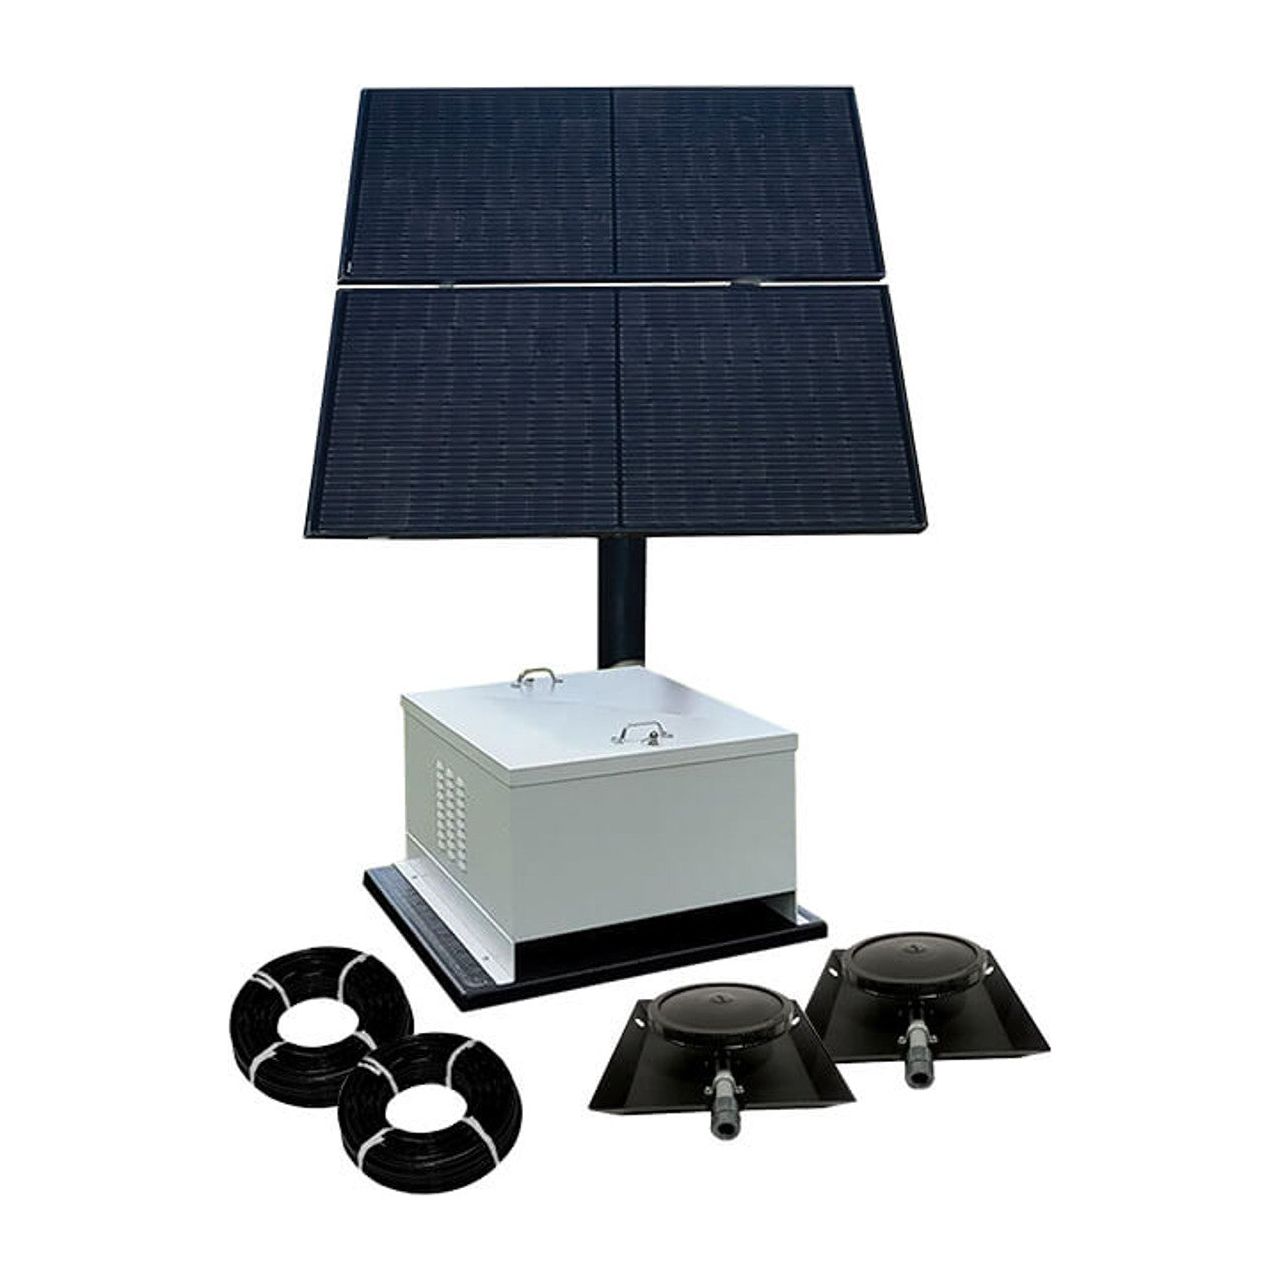 EasyPro NA2W NightAir™ Solar Aeration System - American Pond Supplies Easy Pro Solar Aerator Solar Aerator